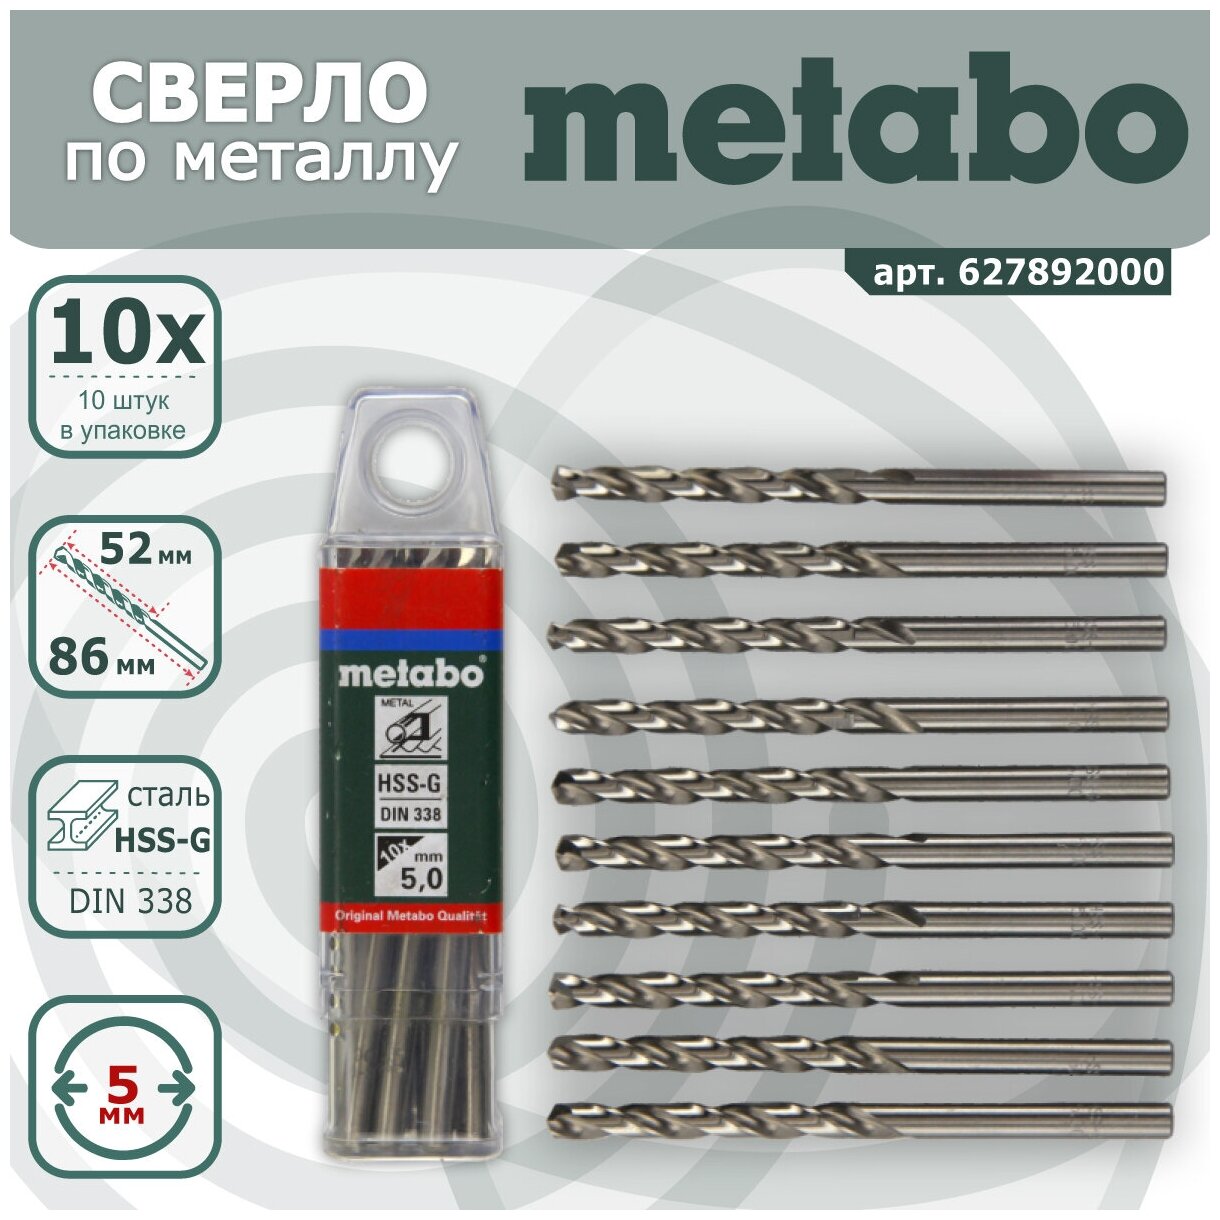 Сверла по металлу Metabo HSS-G 5x52/86 мм упаковка 10 шт (арт. 627892000)